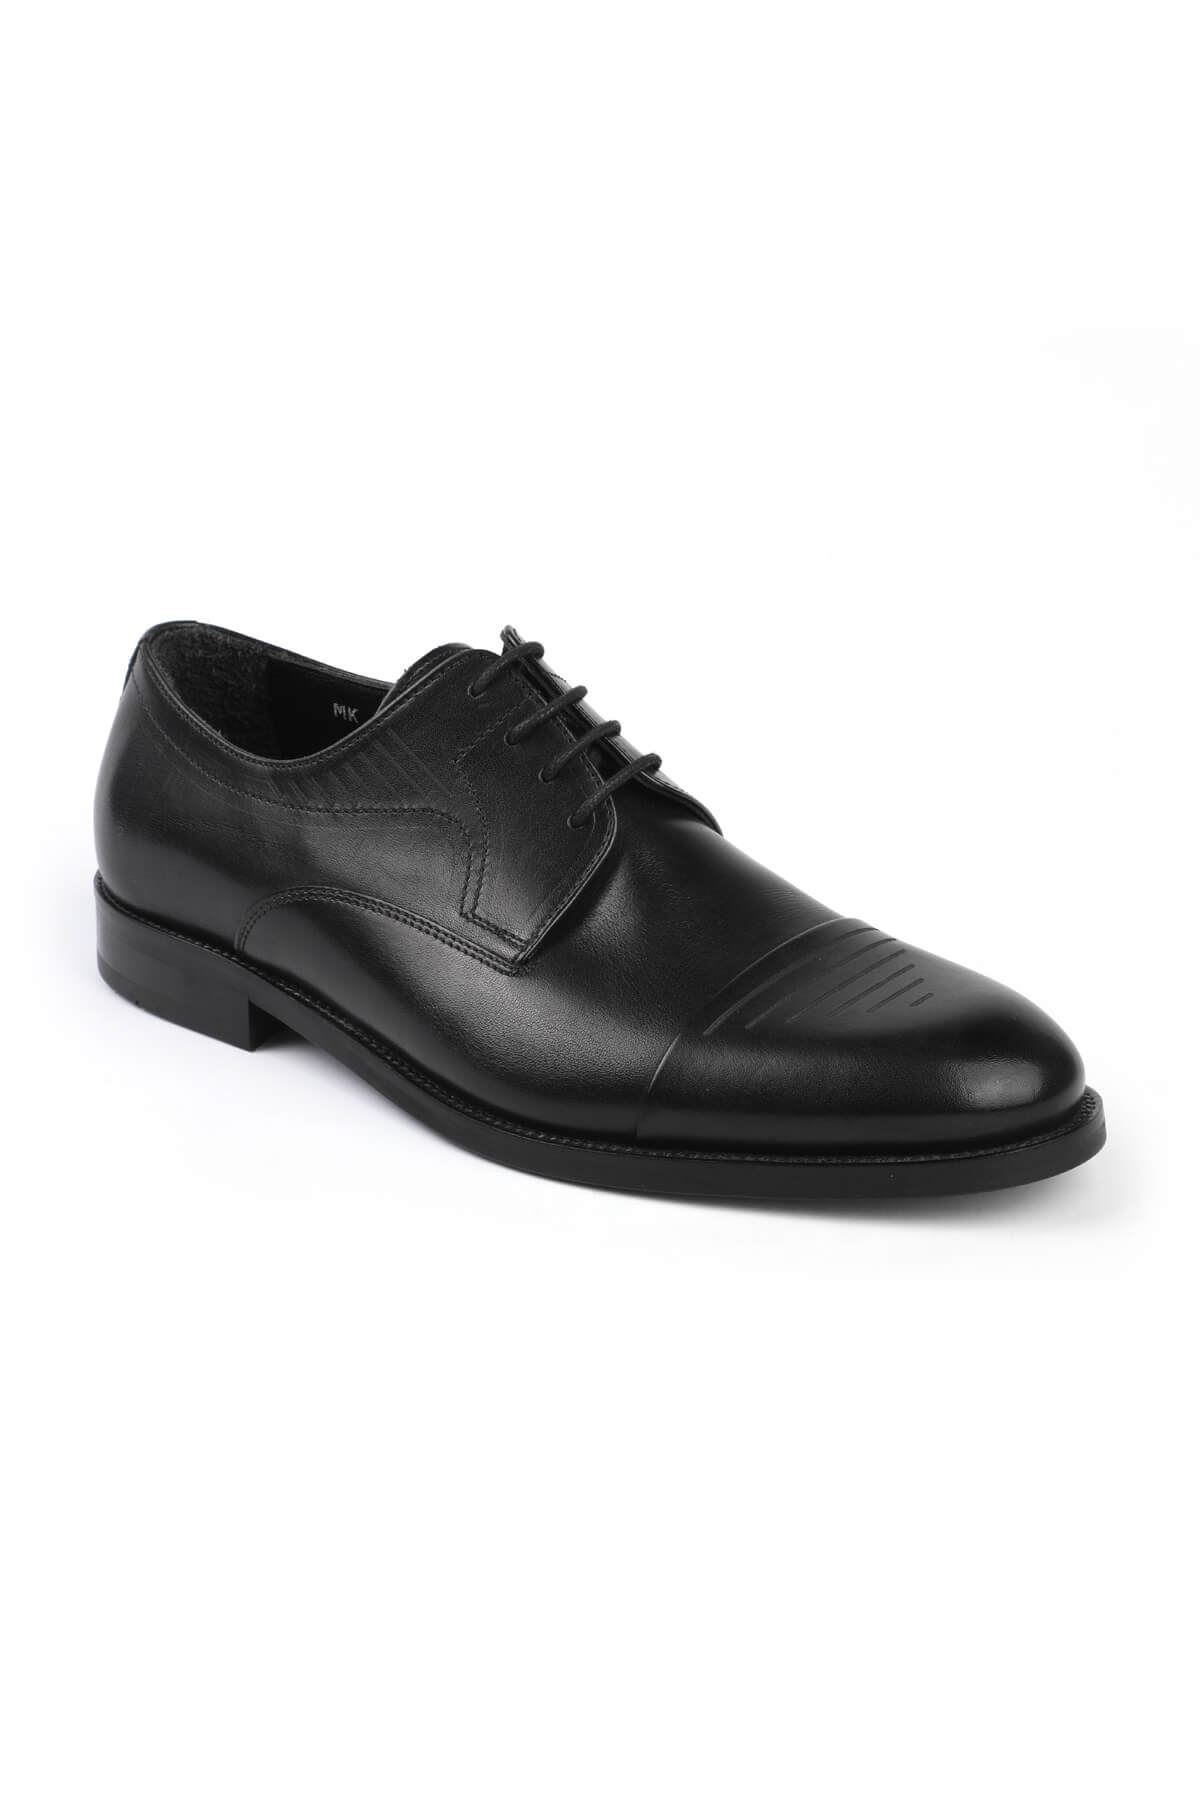 Libero 2776 Black Classic Shoes